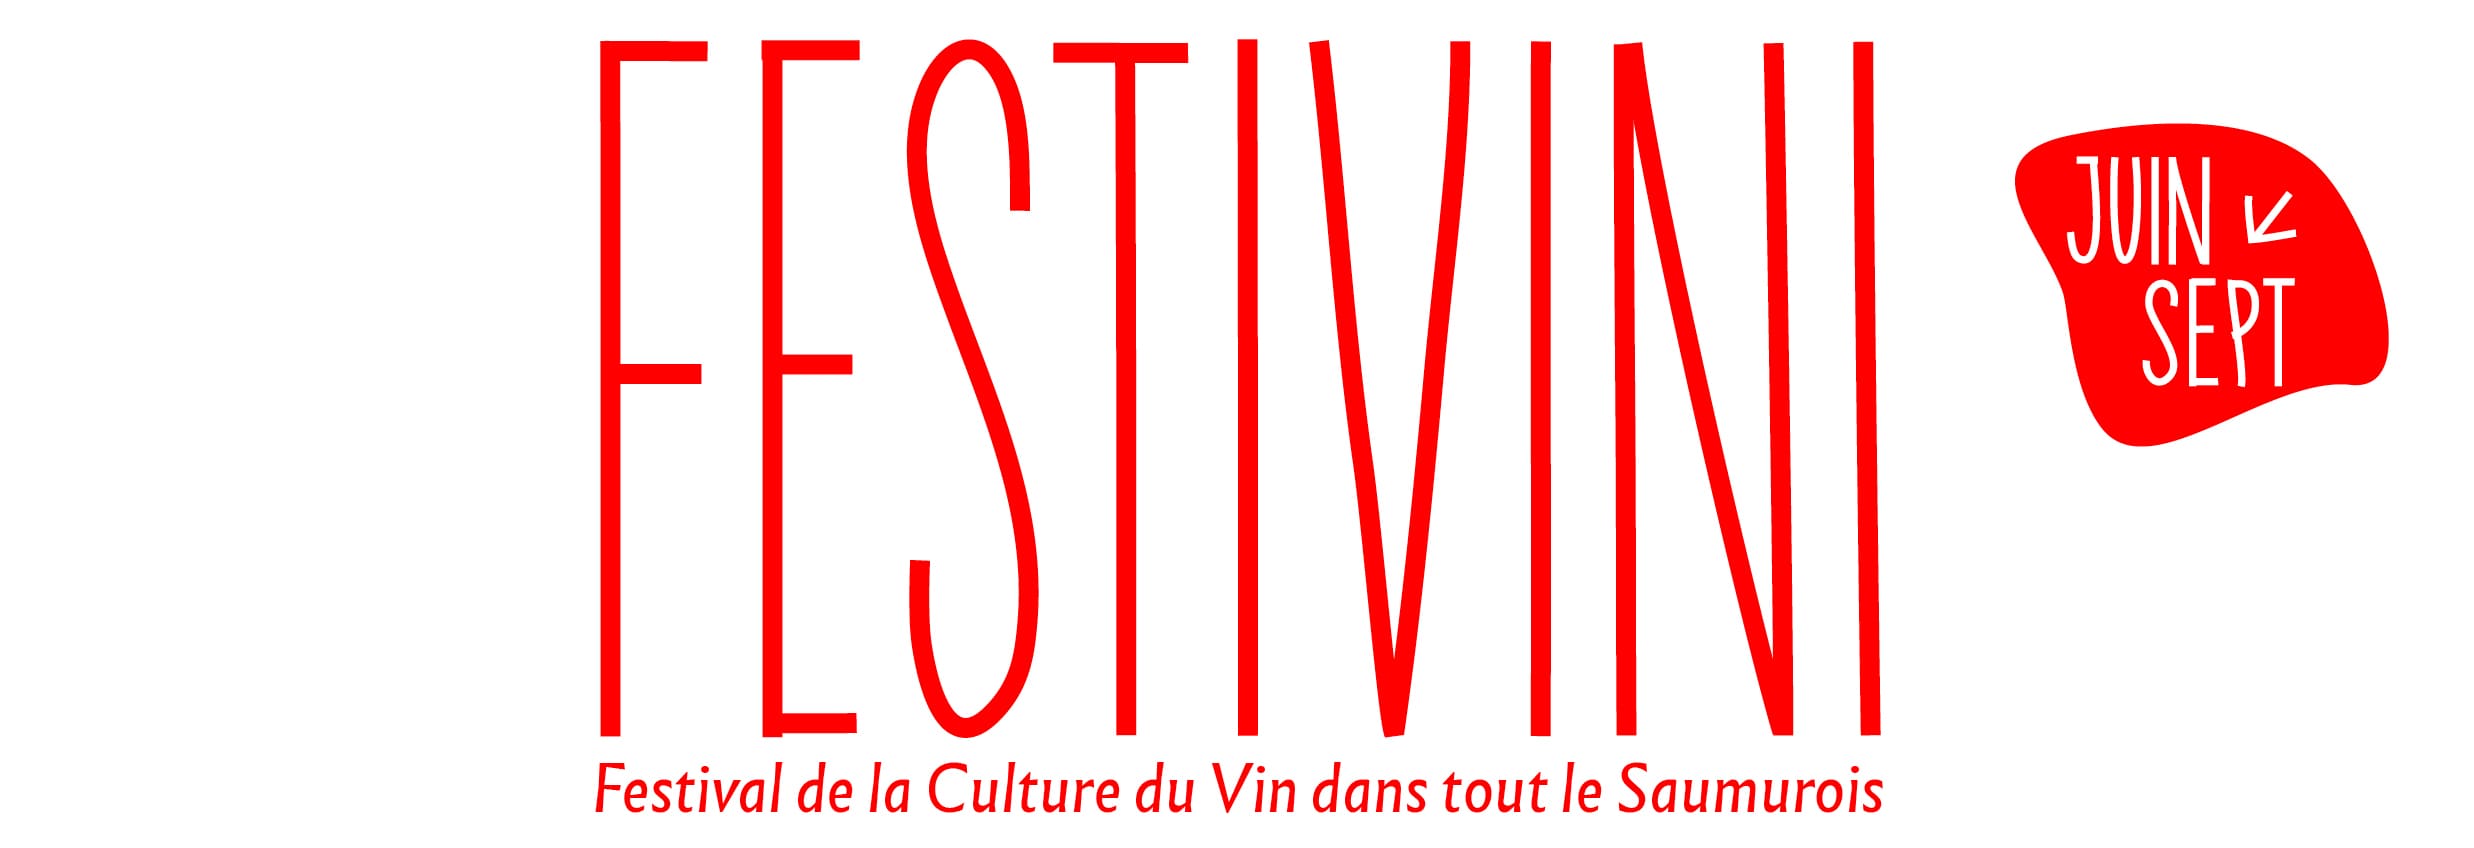 festival festivini - Saumur